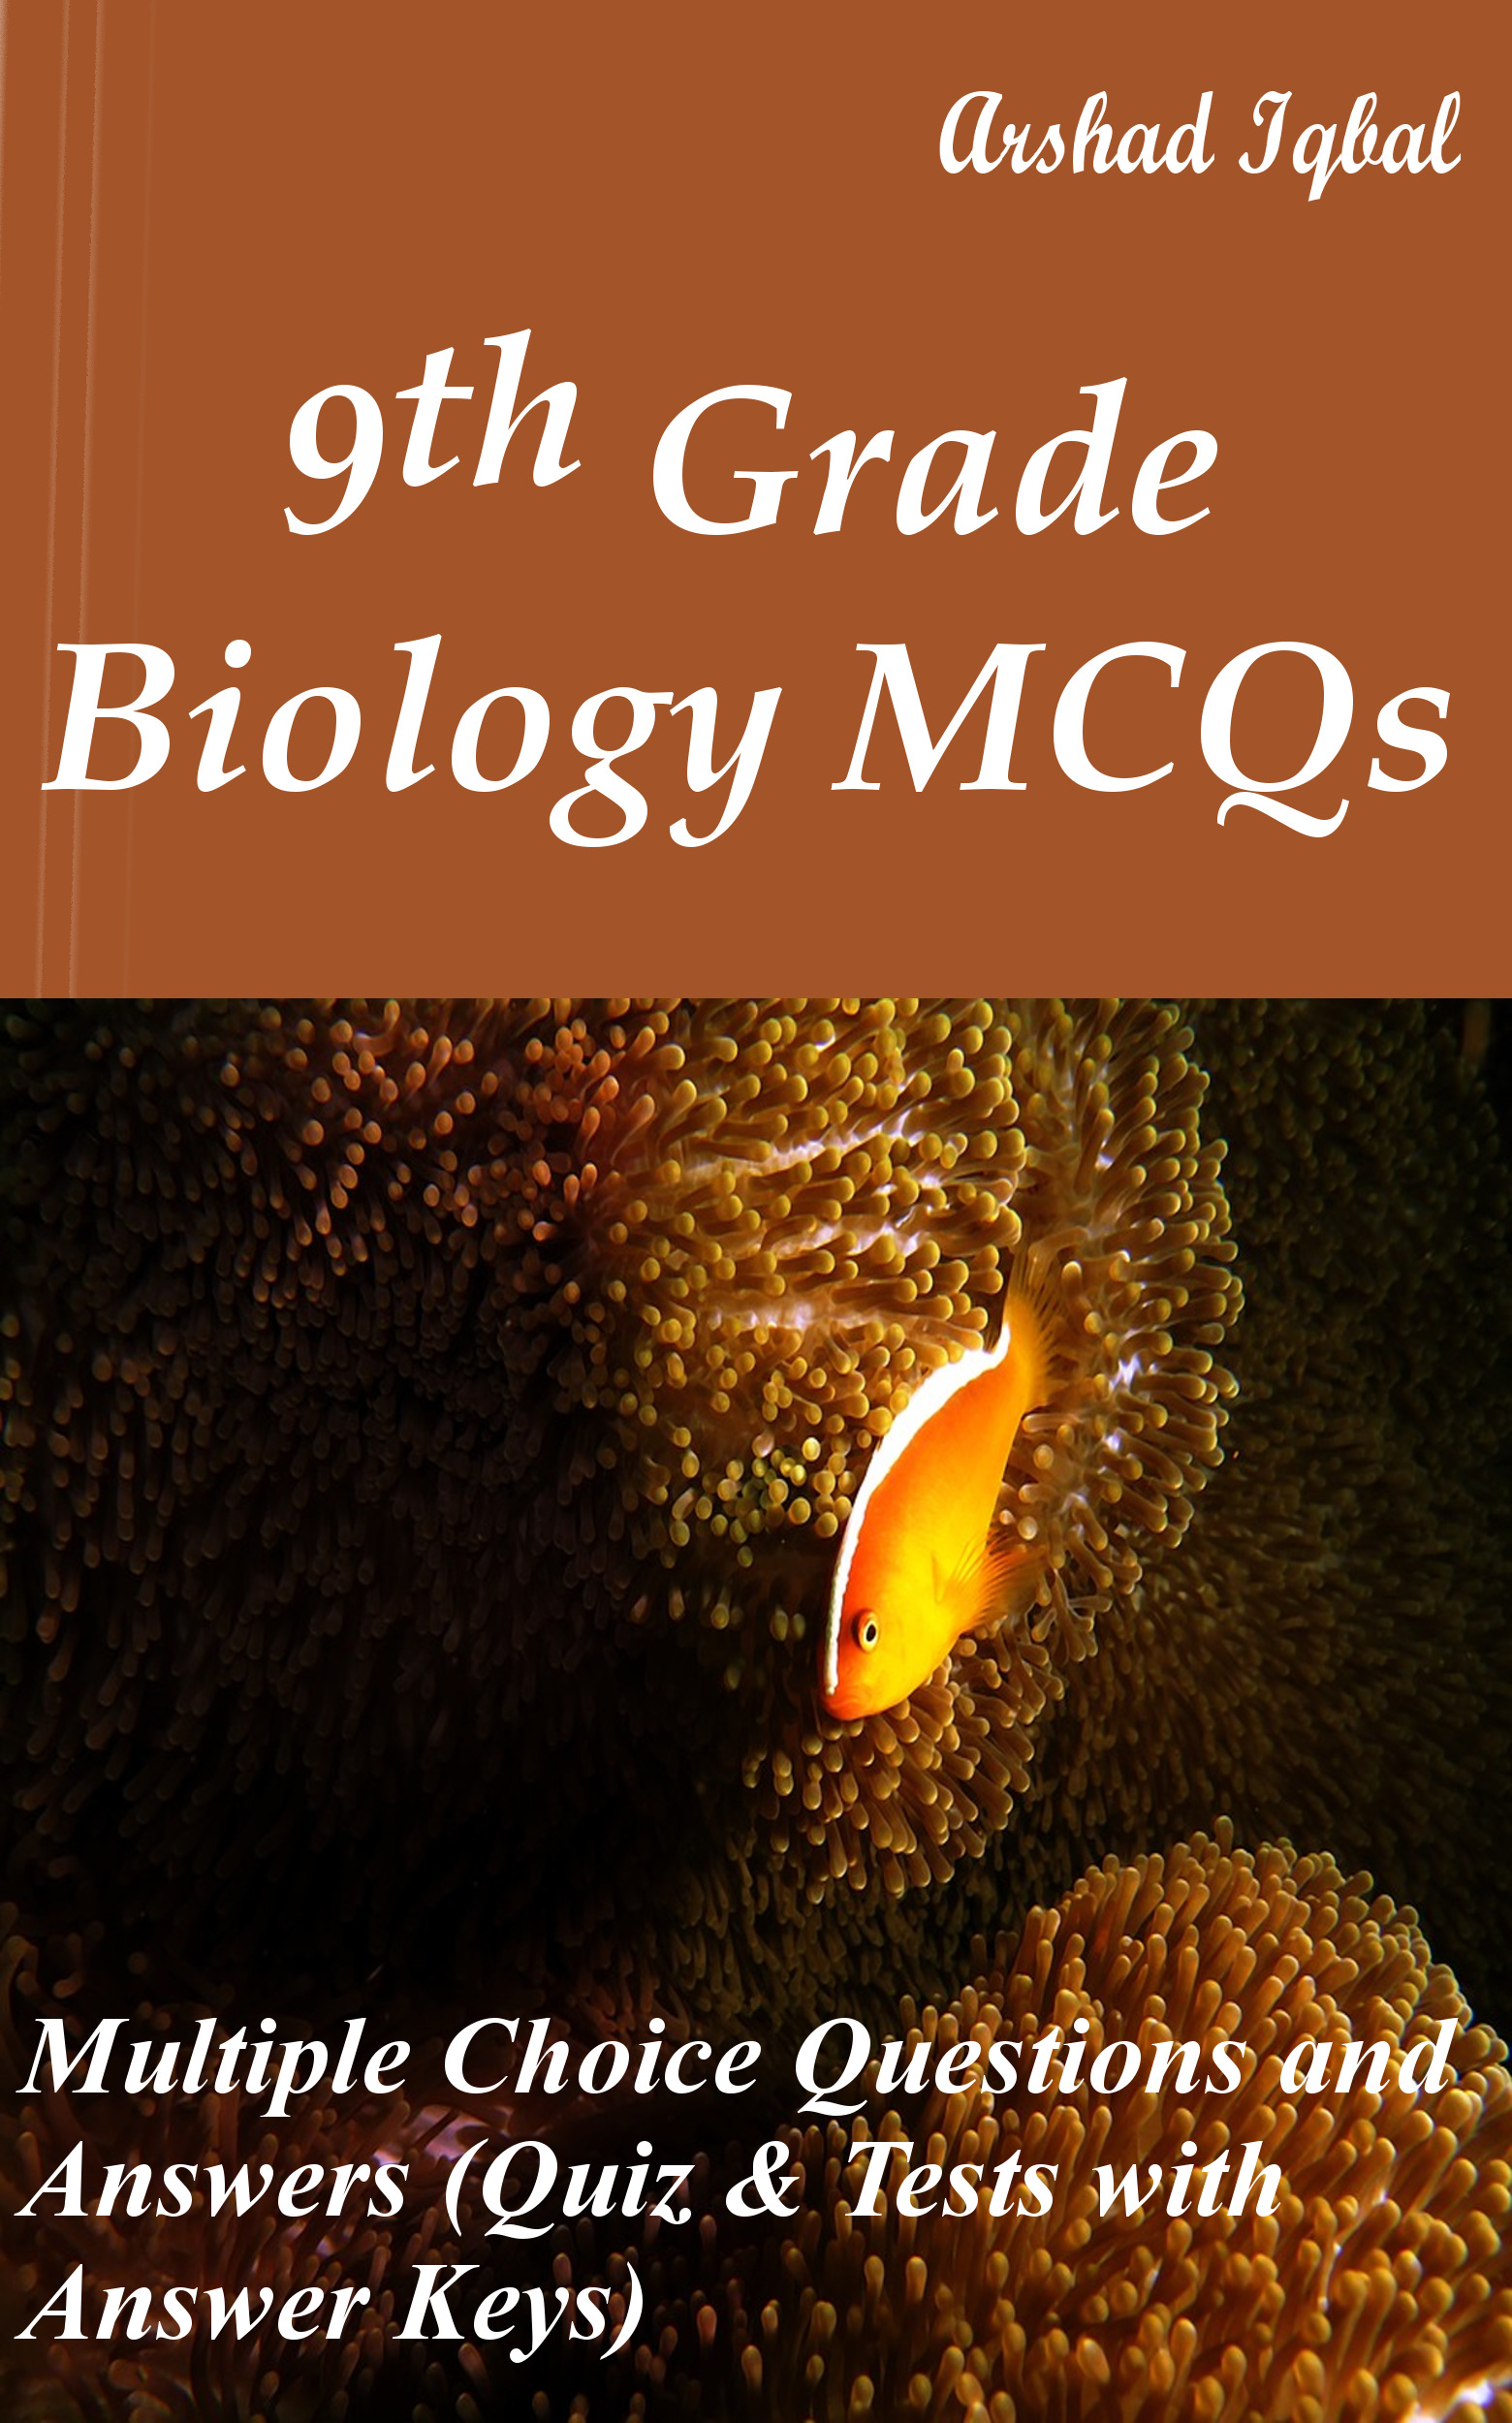 9th Grade Biology MCQ Book PDF